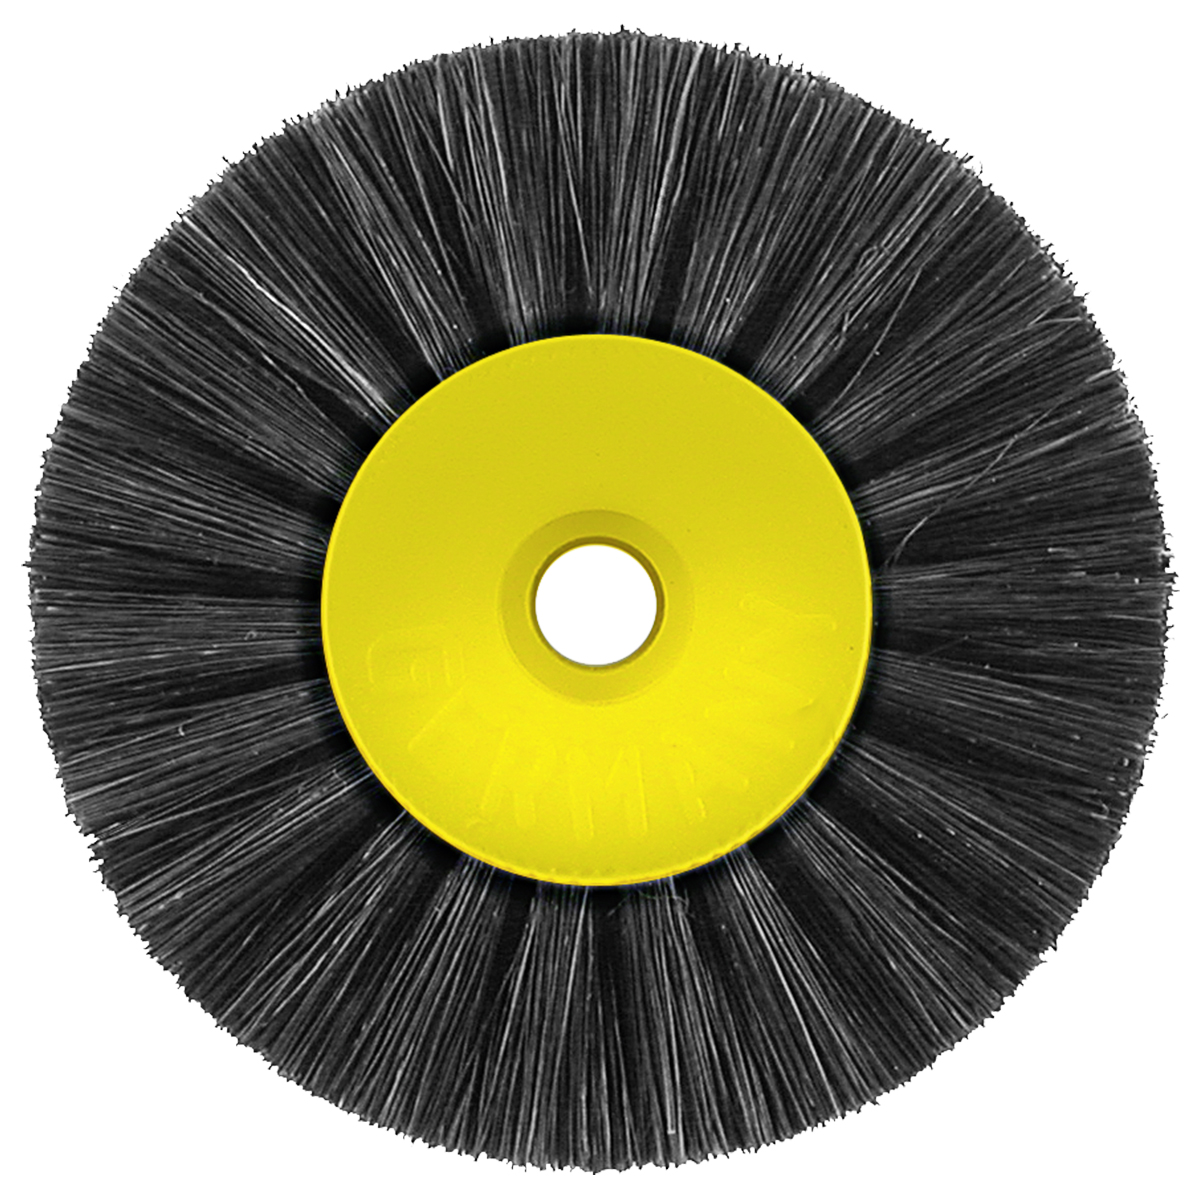 HoPla Circular brush bristles black 50 mm with plastic centre